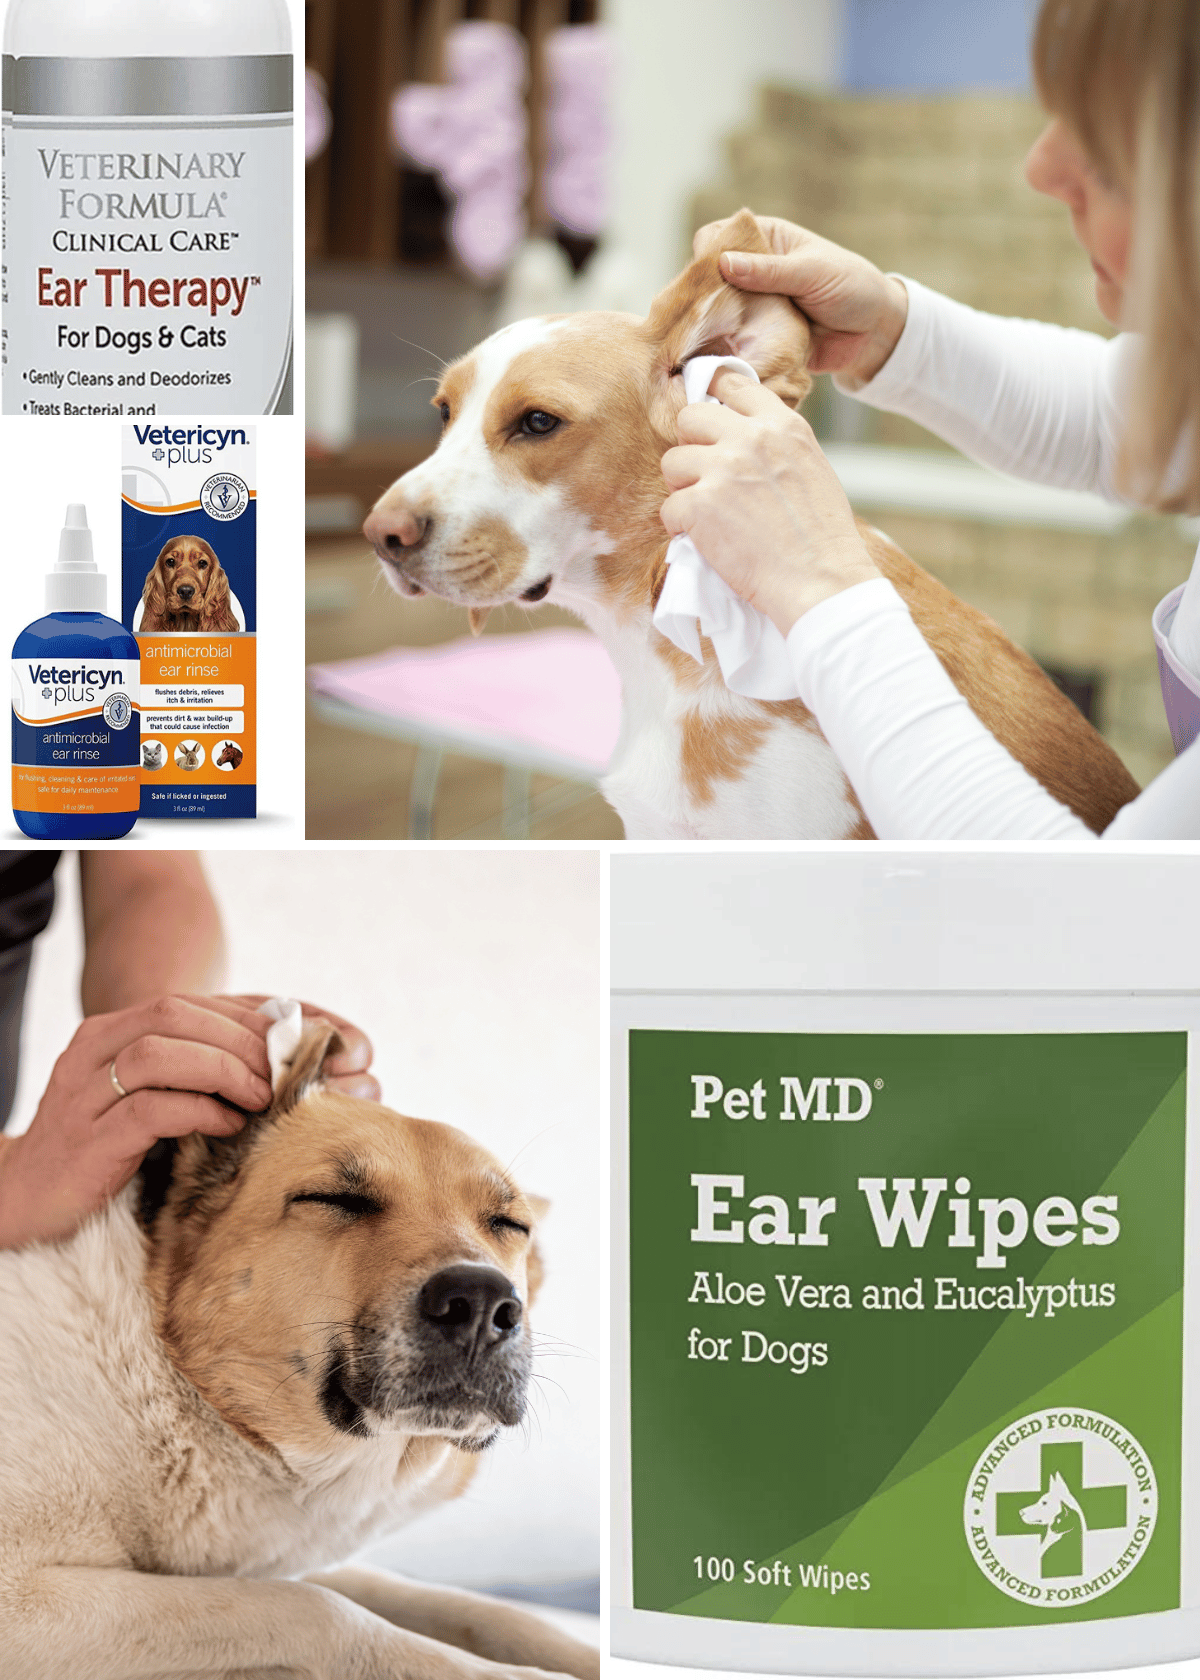 Best Dog Ear Cleaner